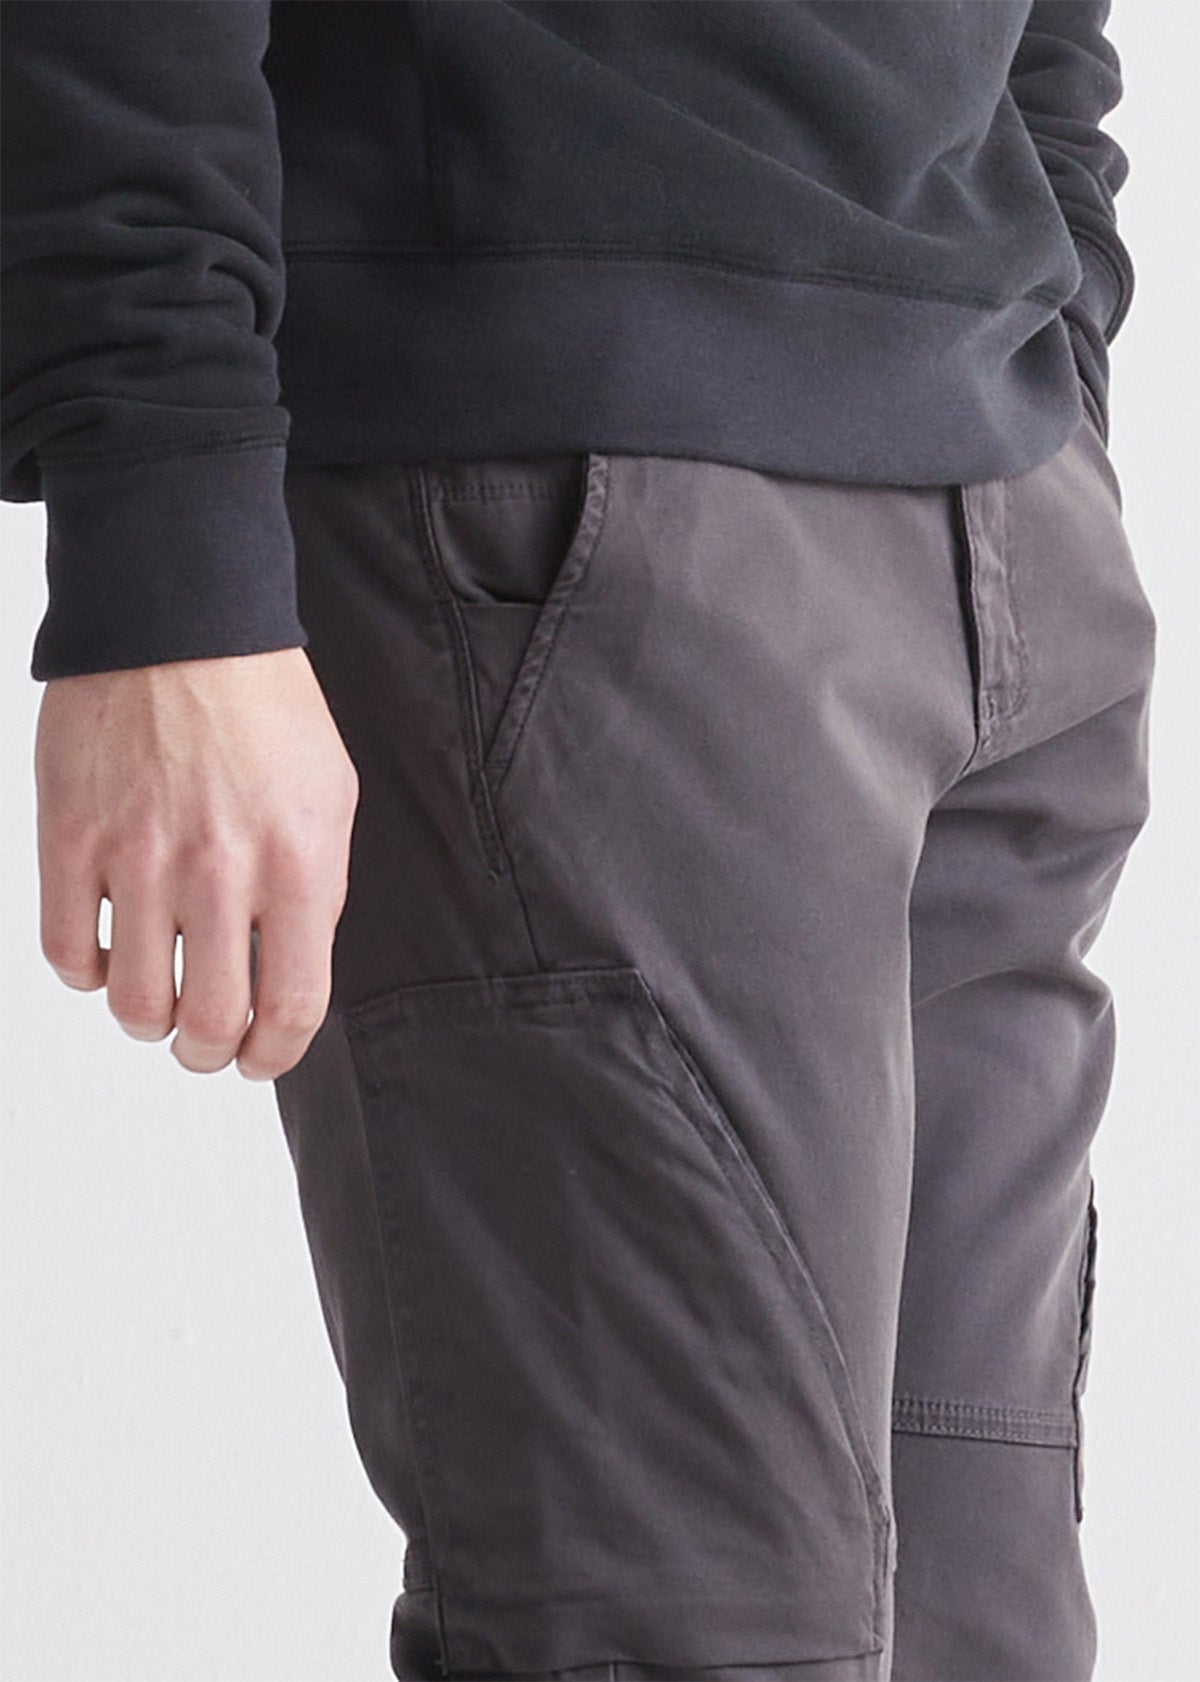 Men's Athletic Water Resistant Pant